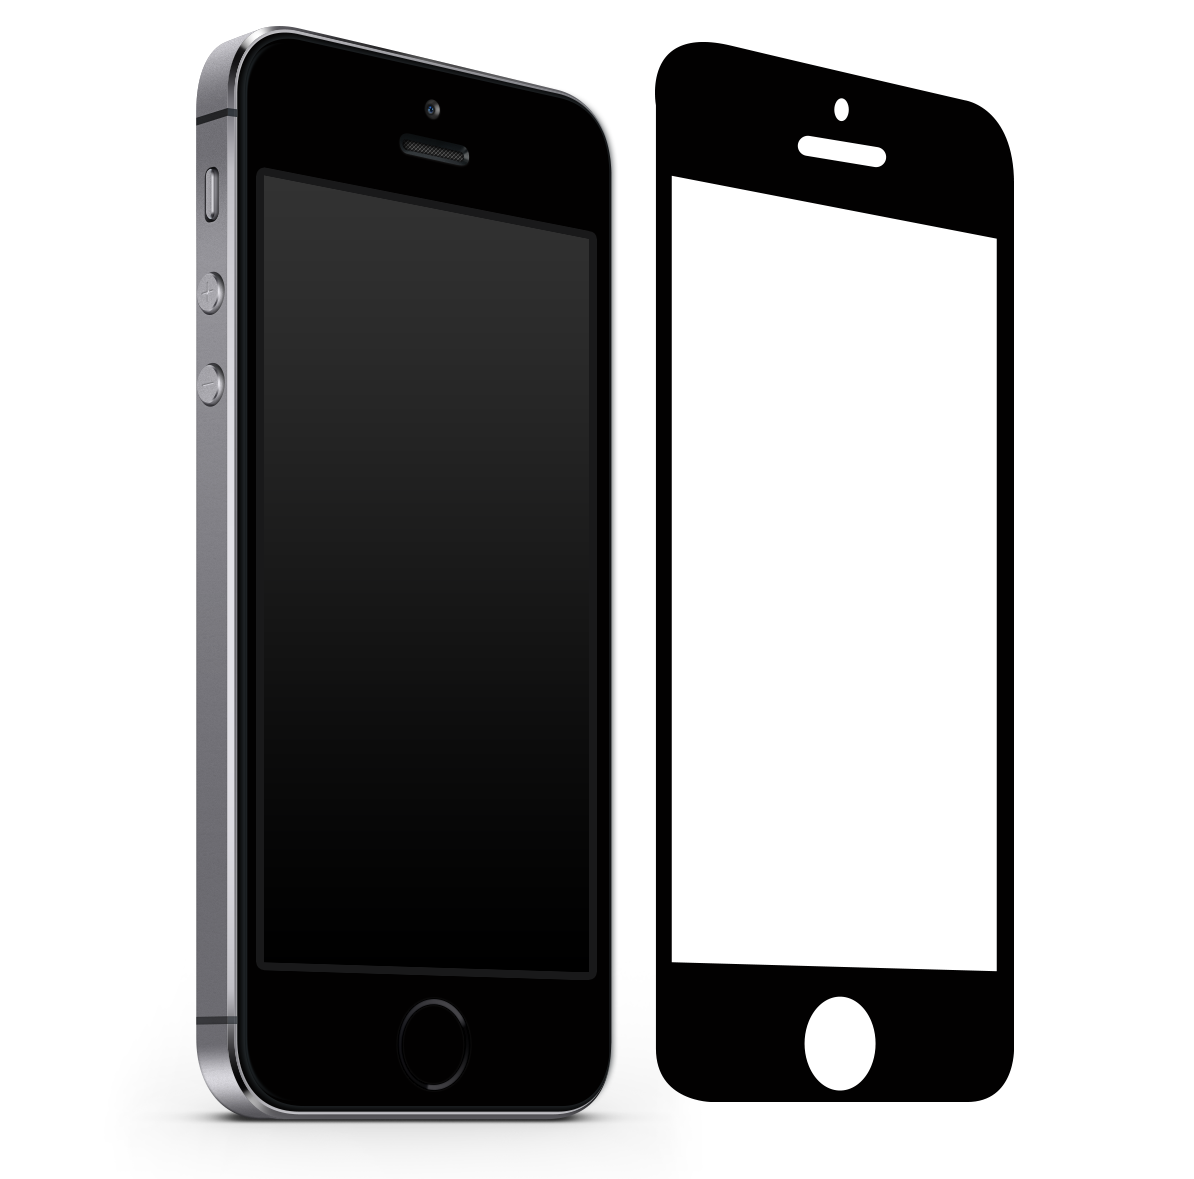 Apple iPhone 5 (Black)